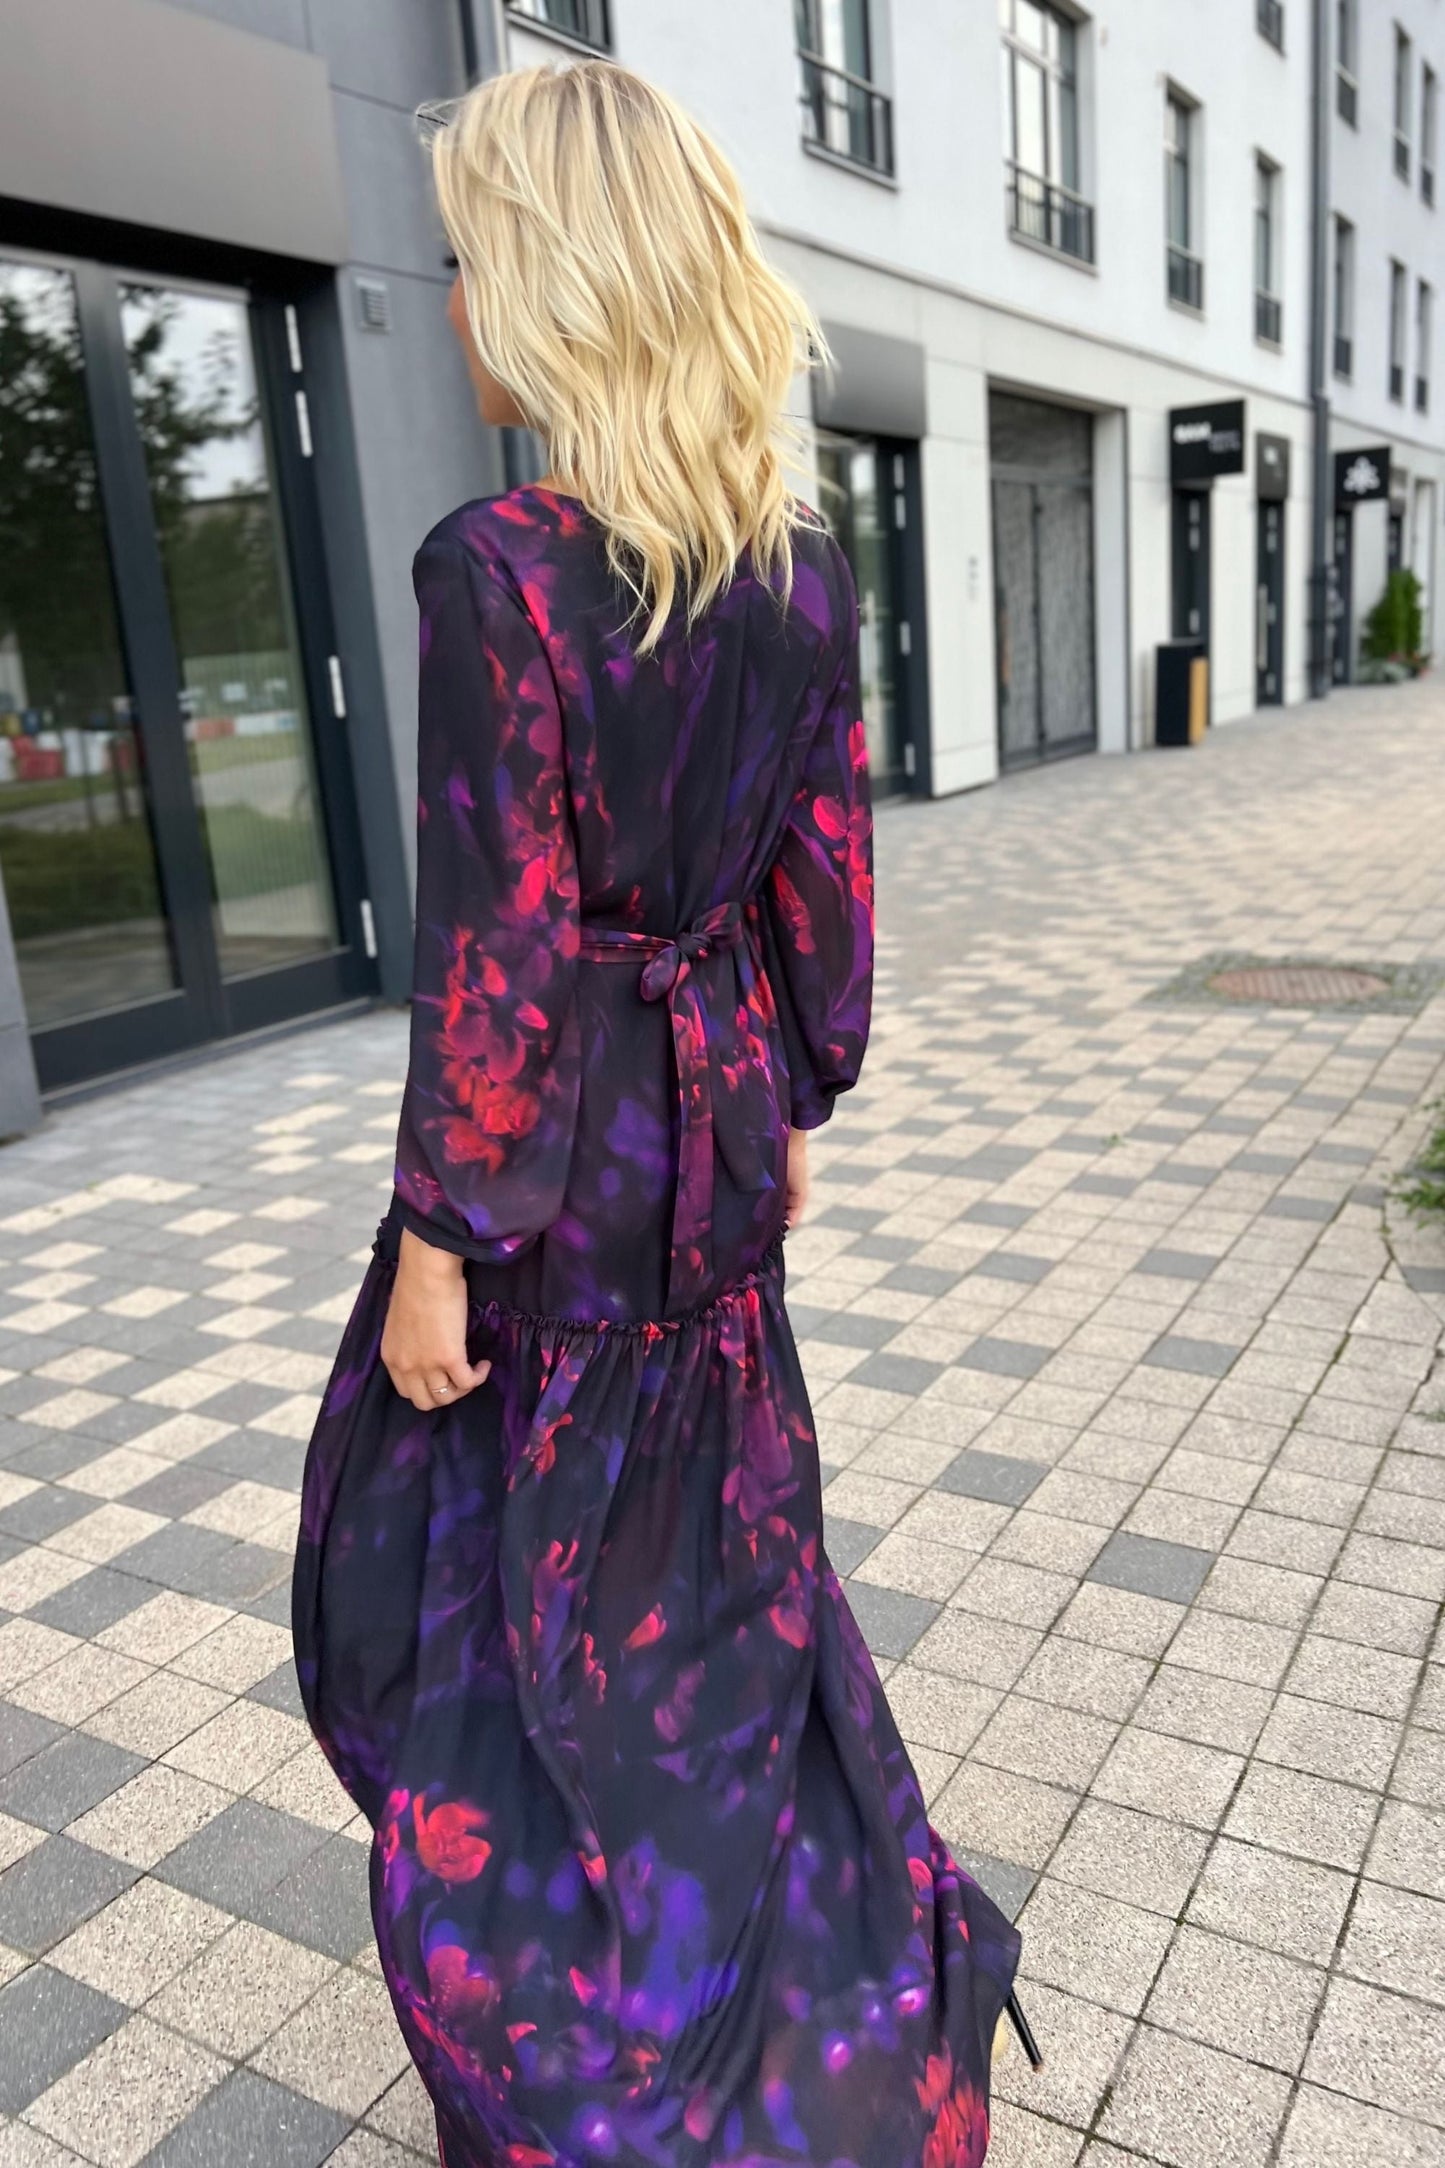 Chiffon Maxi dress in dark purple with flowers